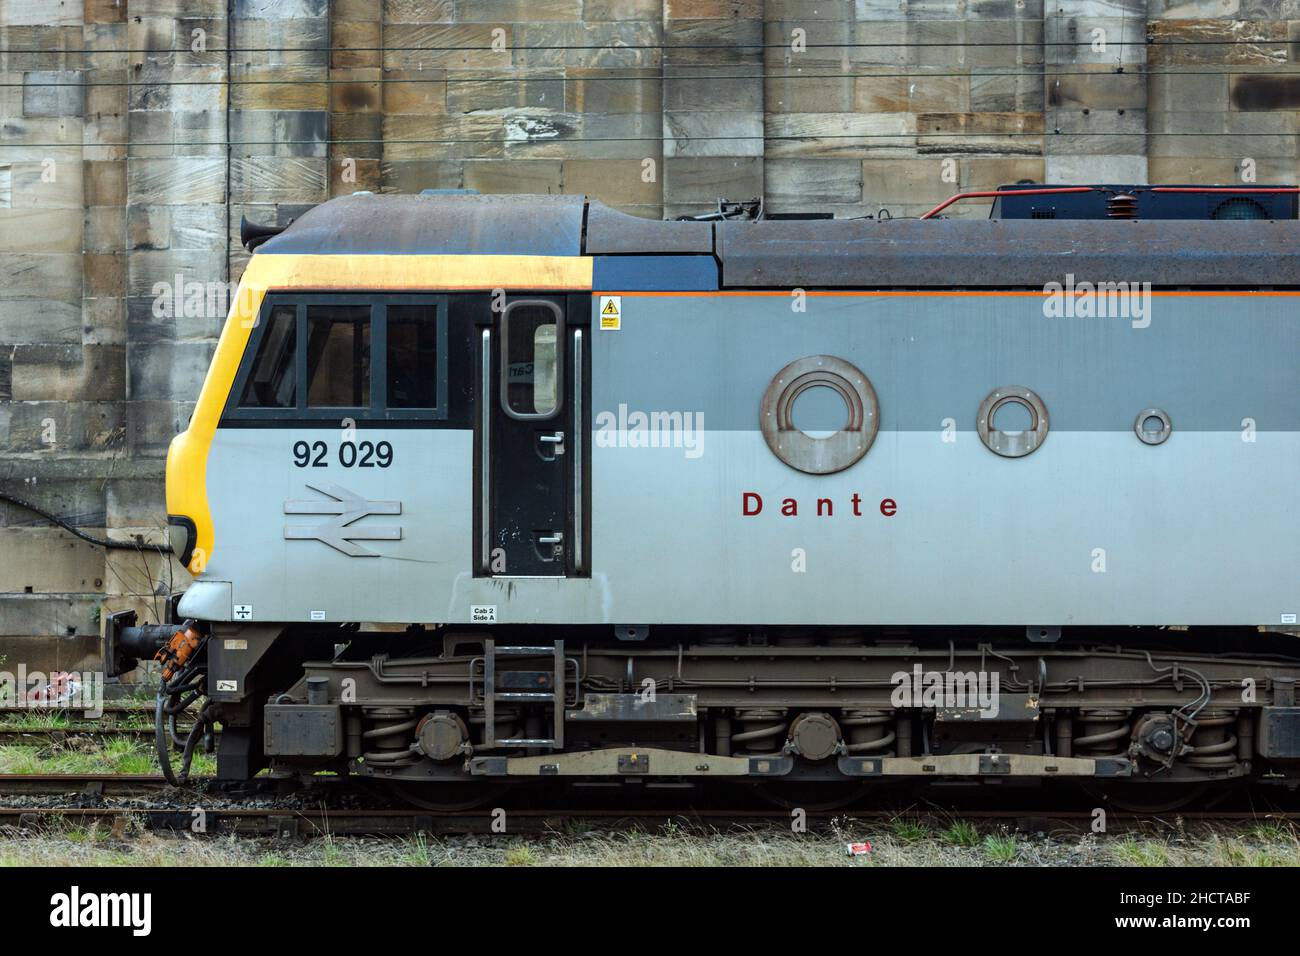 92029 'Dante' stabled at Carlisle railway station. Stock Photo